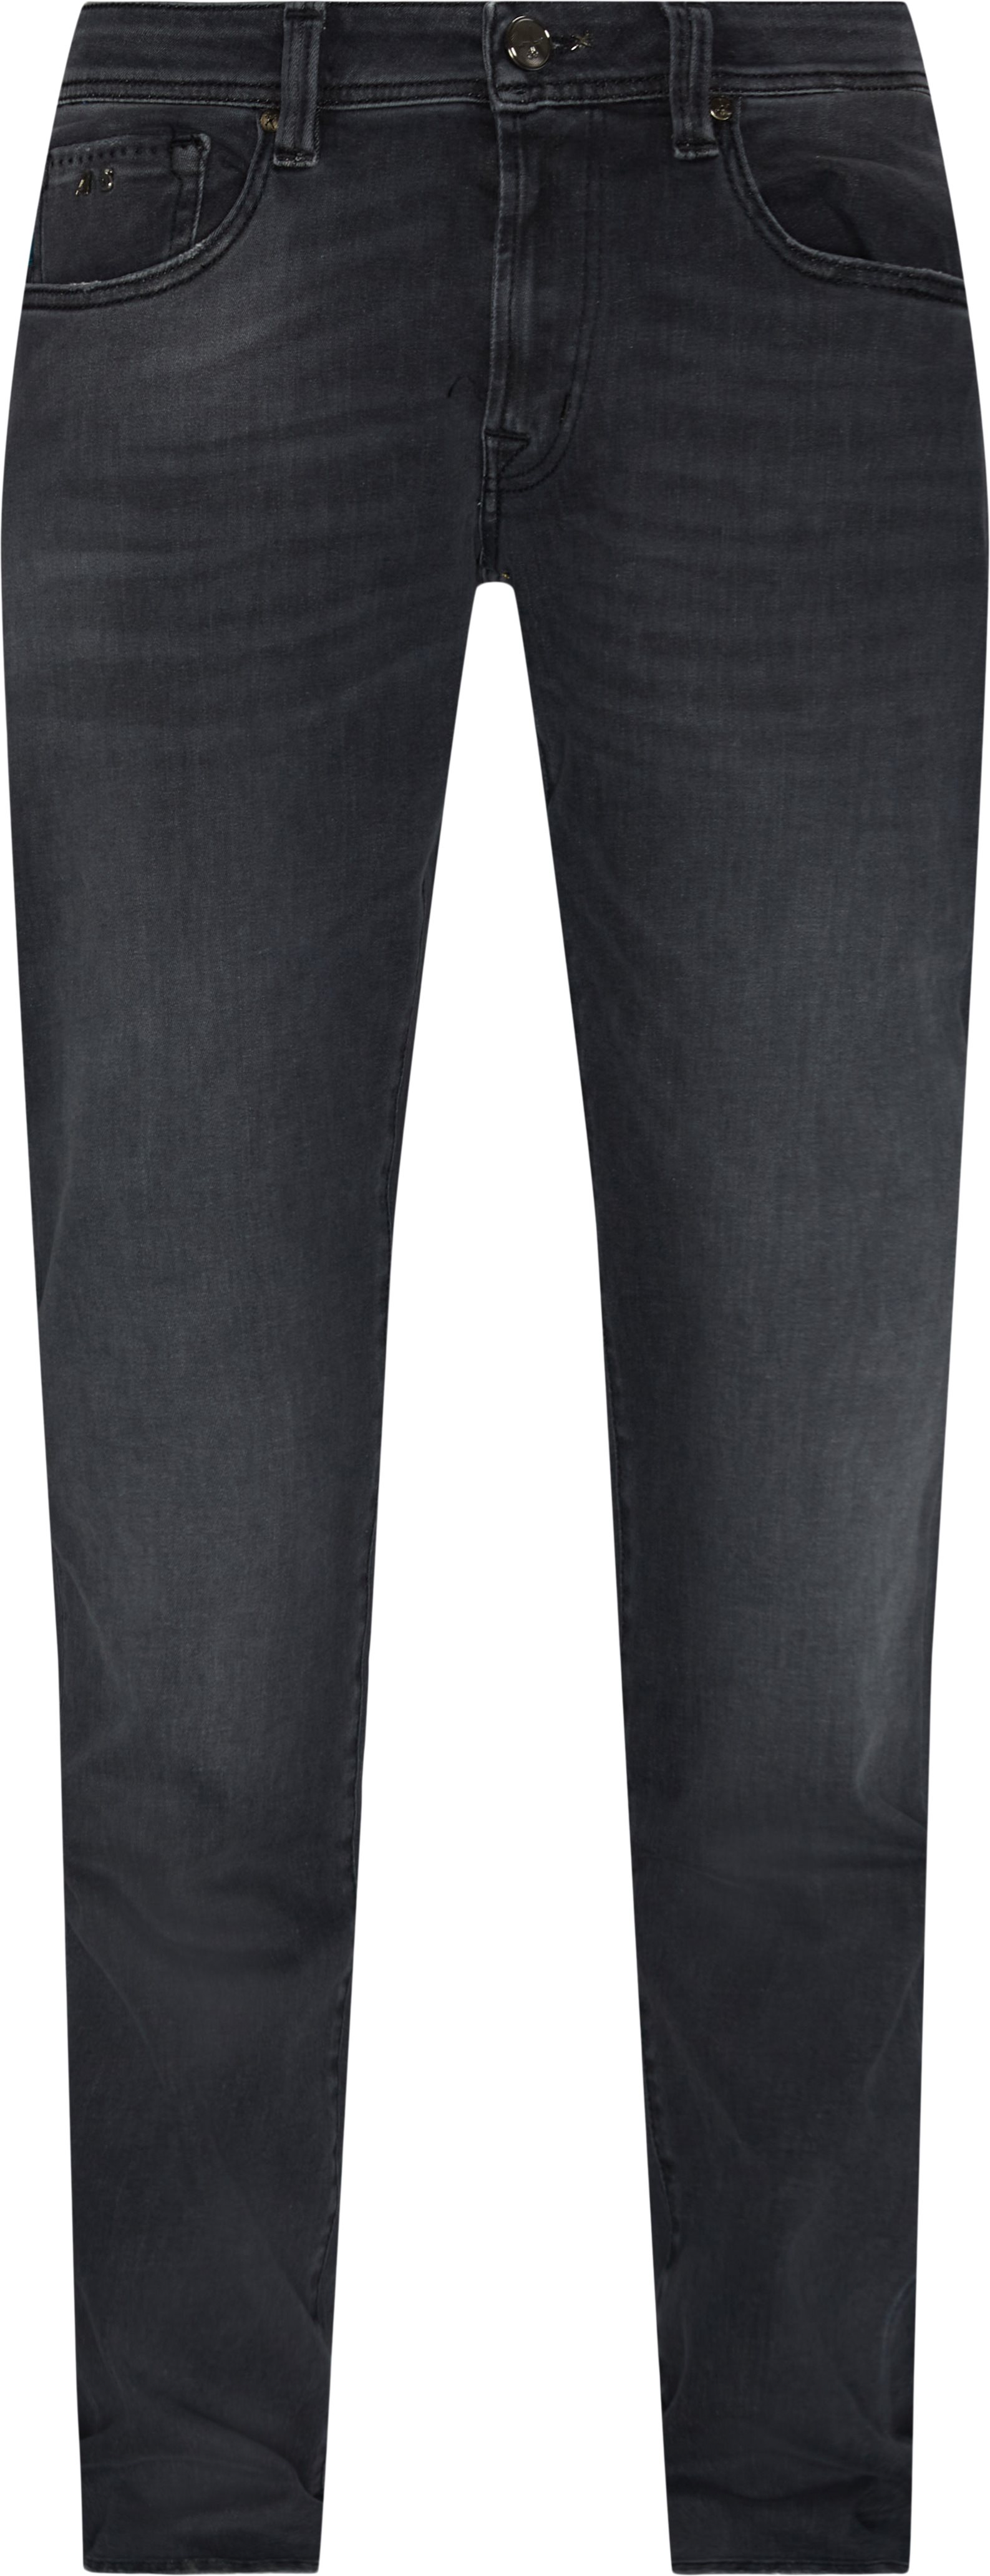 Michelangelo Jeans - Jeans - Slim fit - Grå